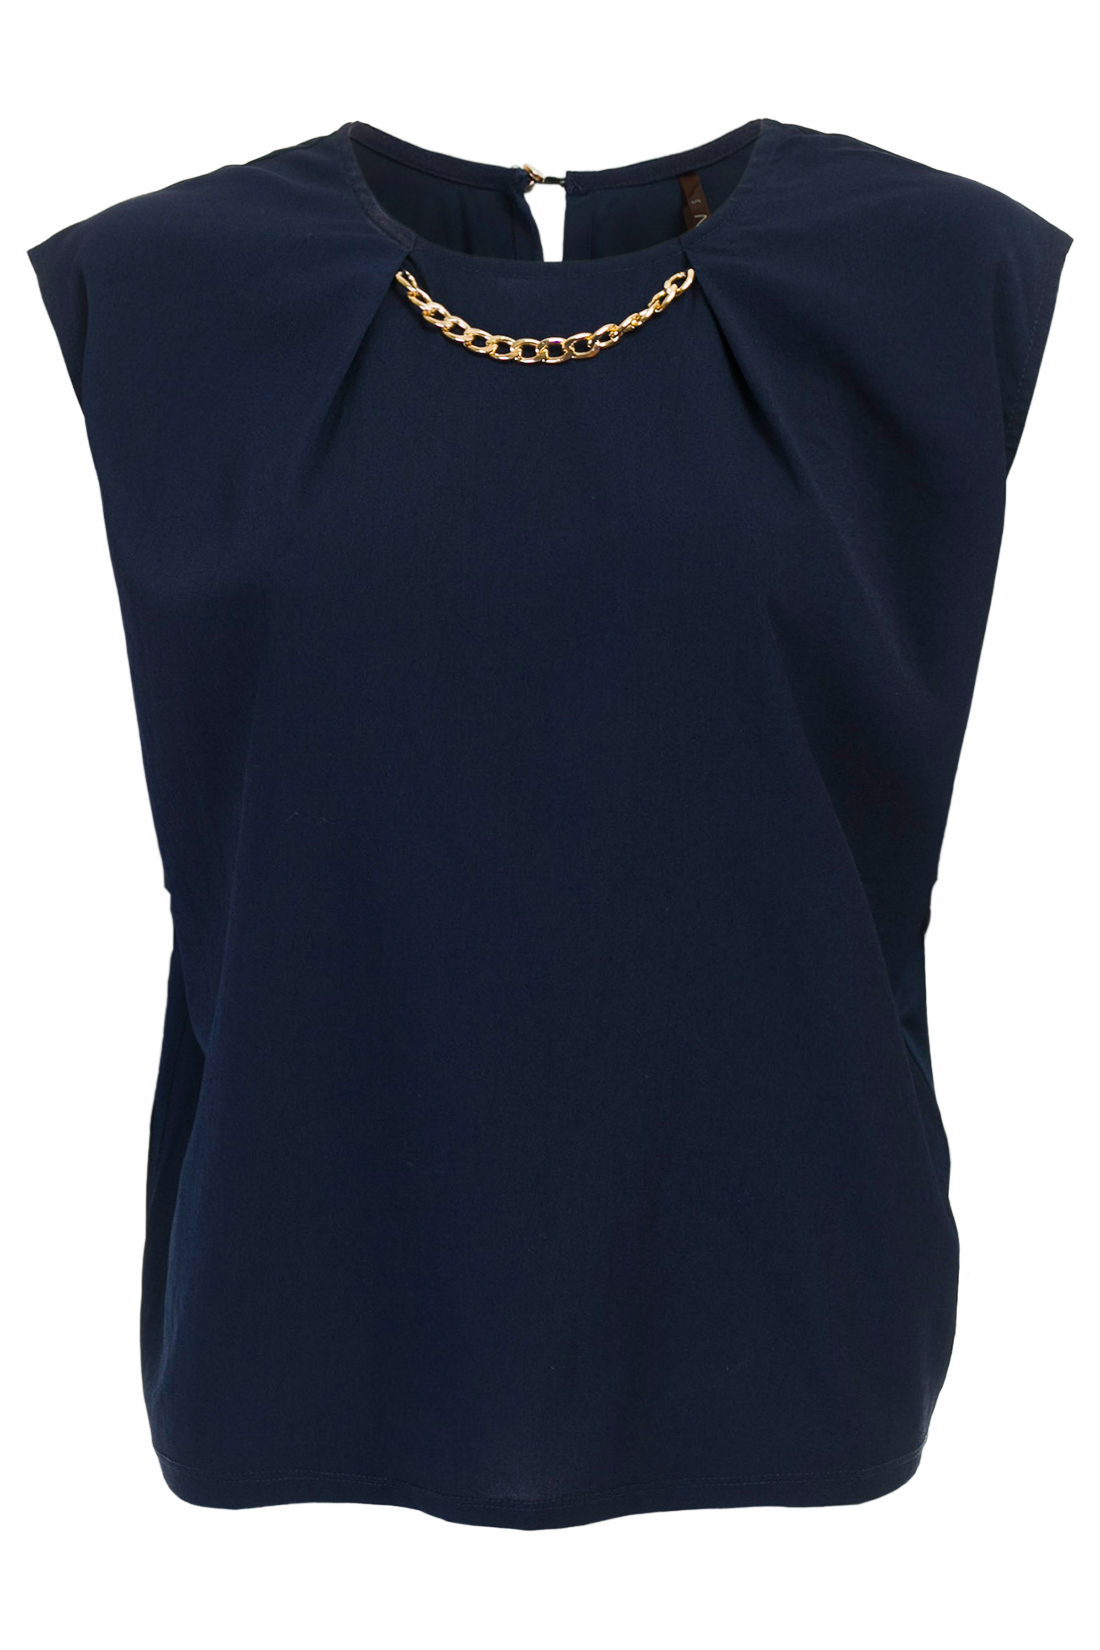 Блузка с цепочкой (арт. baon B197060), размер S, цвет синий Блузка с цепочкой (арт. baon B197060) - фото 5